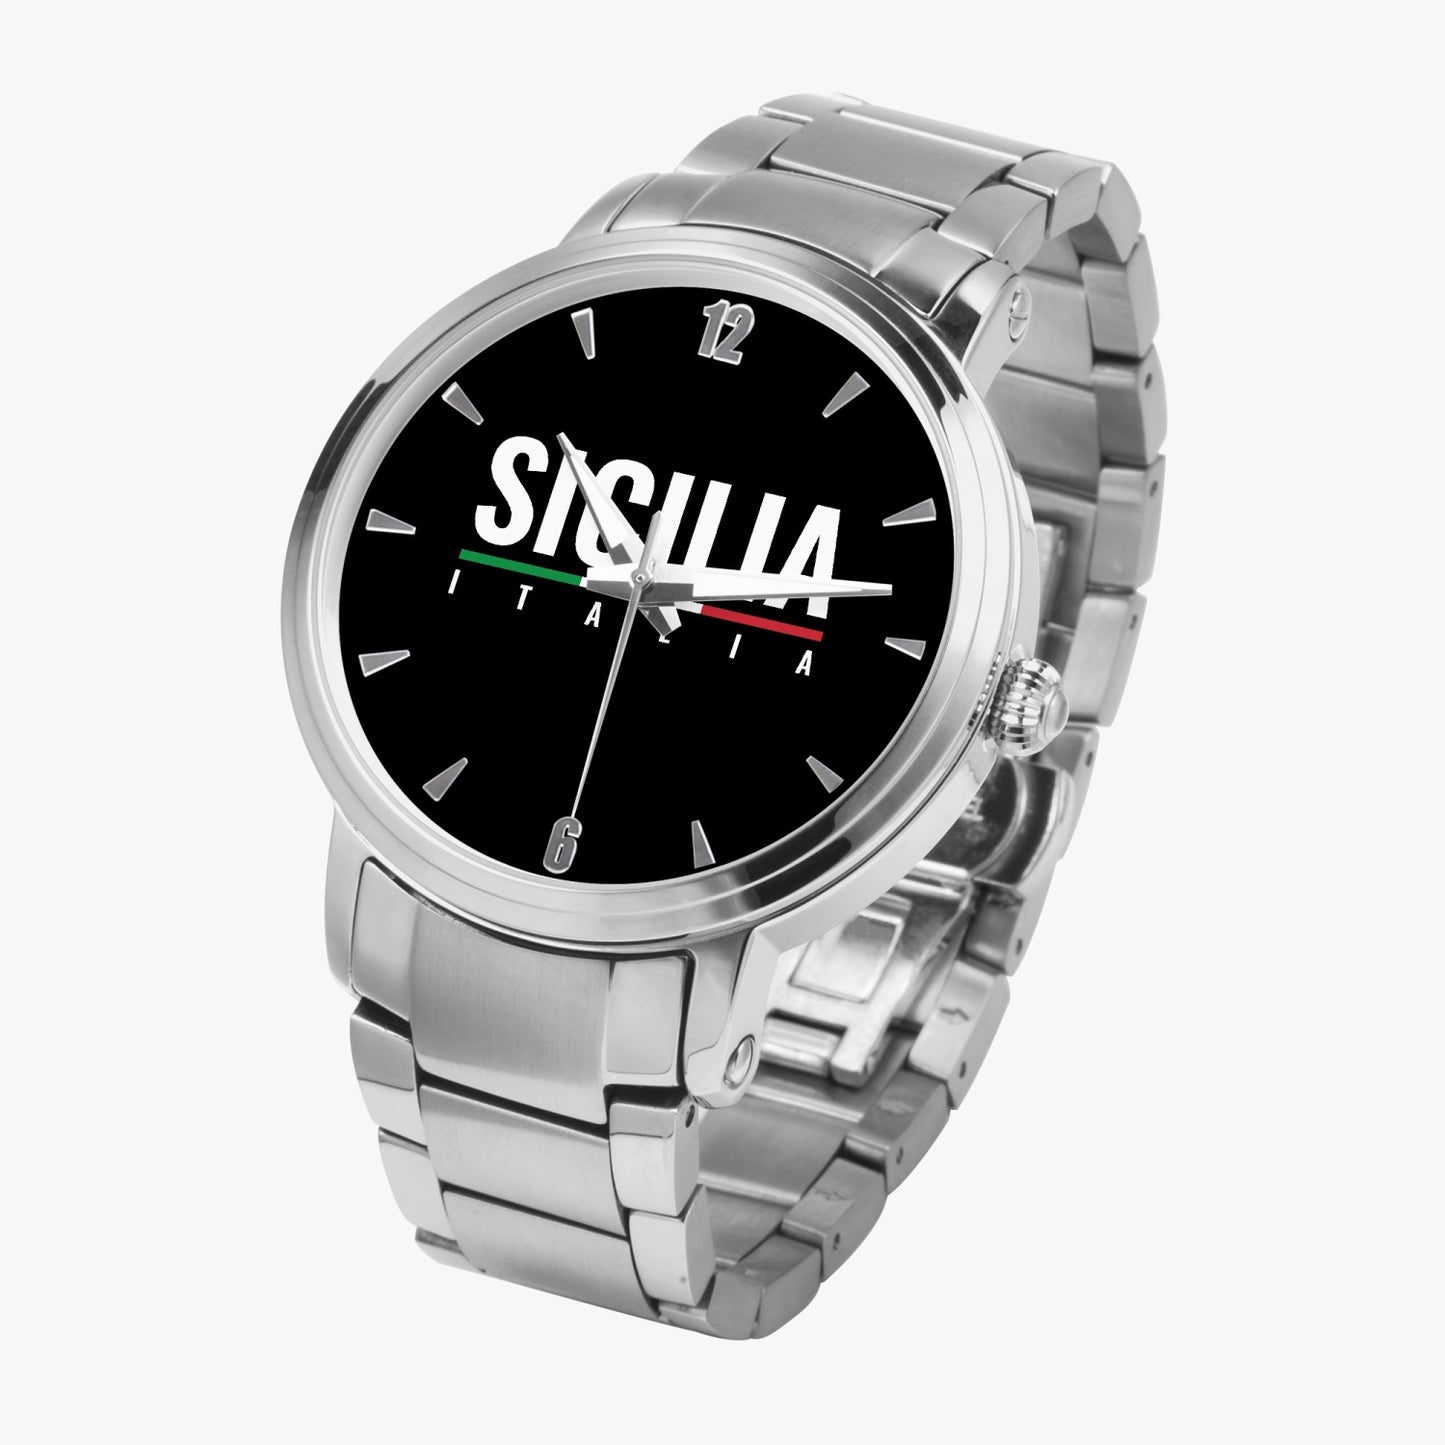 Sicilia Italia Automatic Movement Watch - Premium Stainless Steel